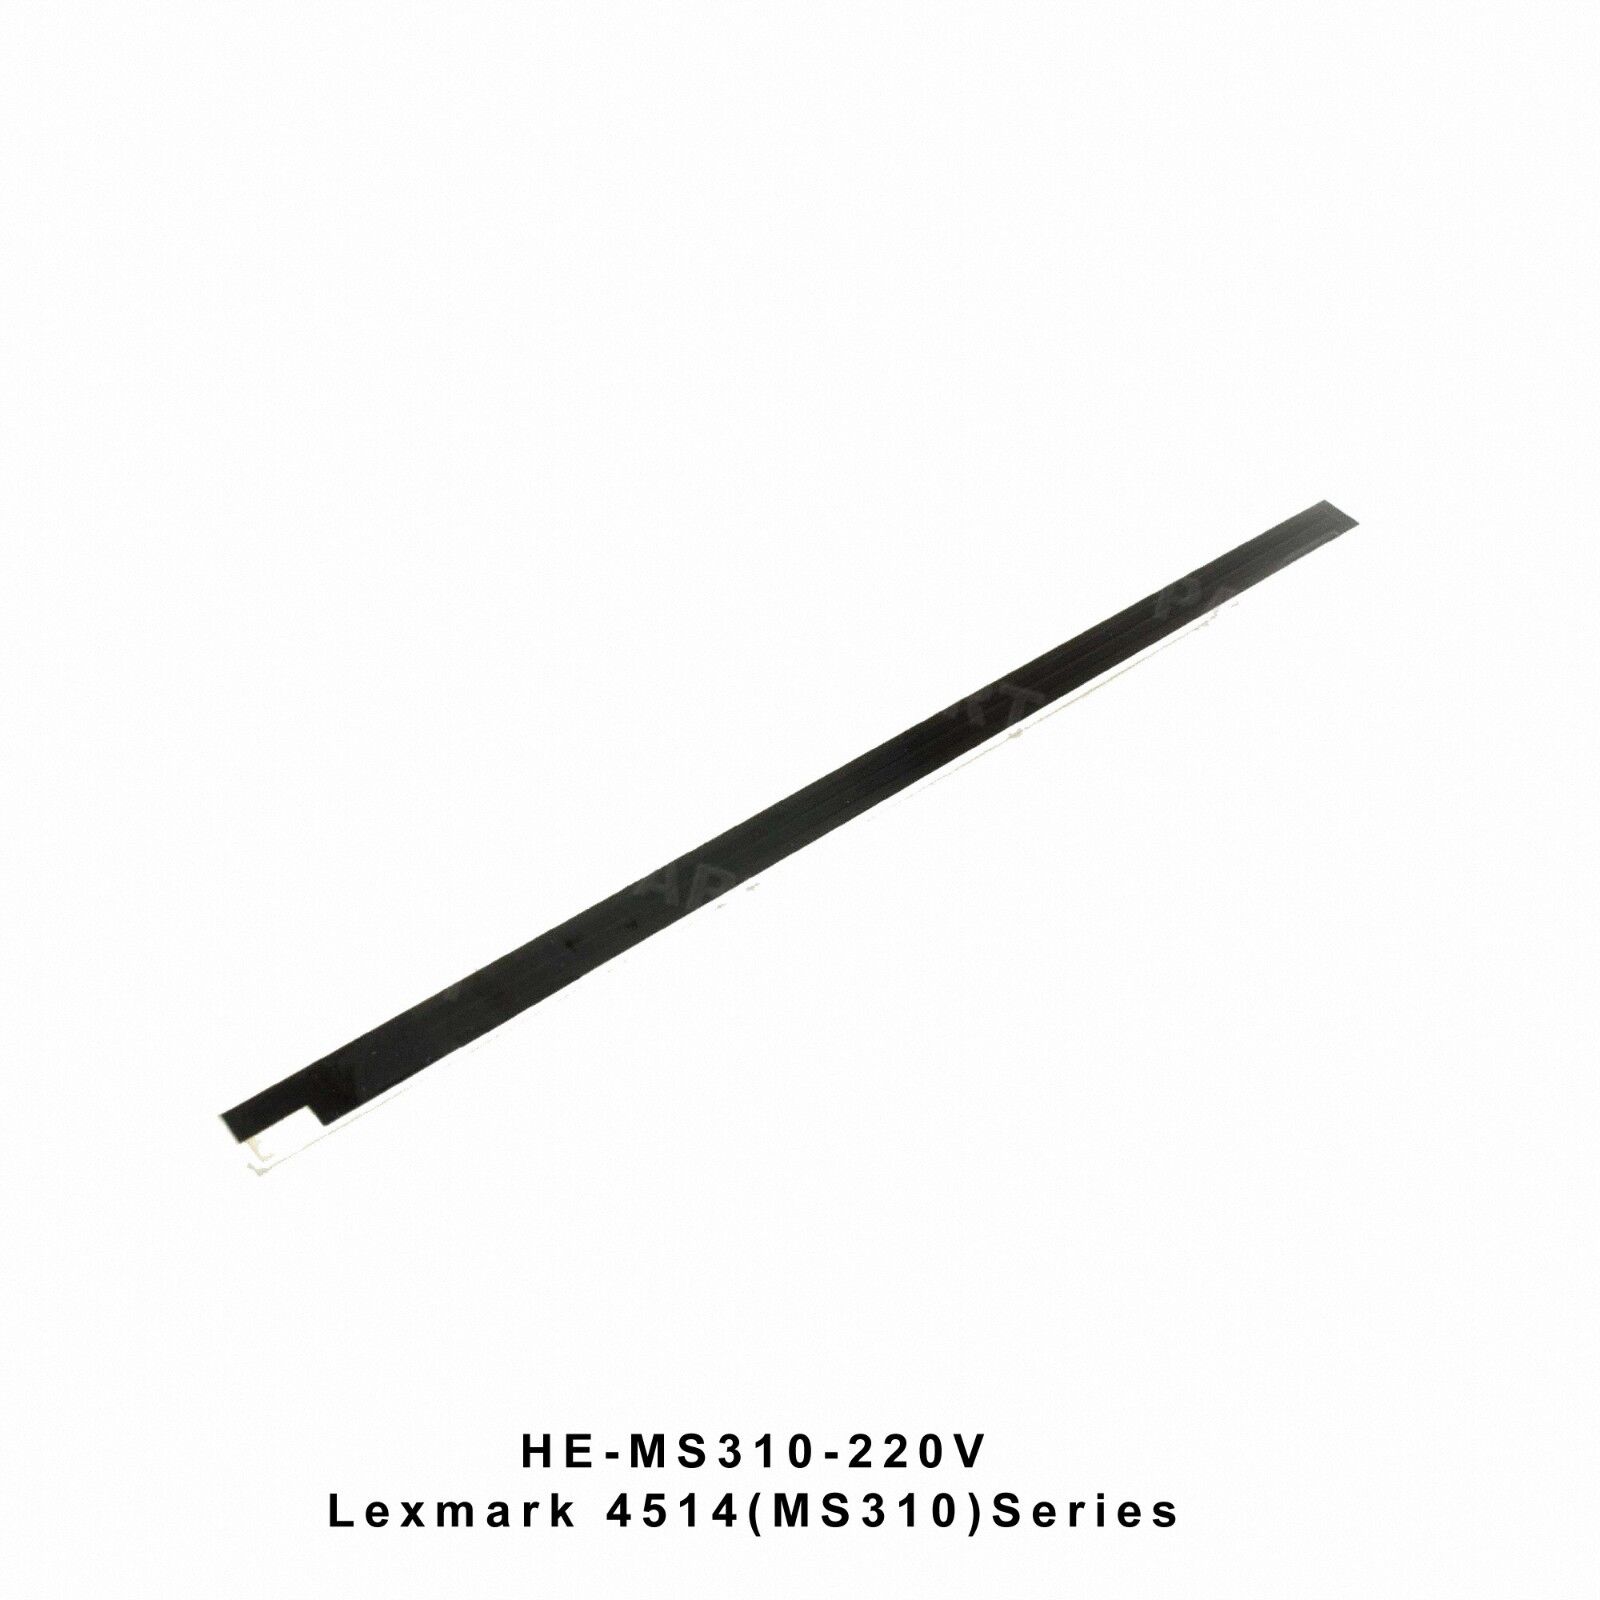 Lexmark 4514 M1140 MS310 Fuser Heating Element (220V) HE-MS310-220V OEM Quality